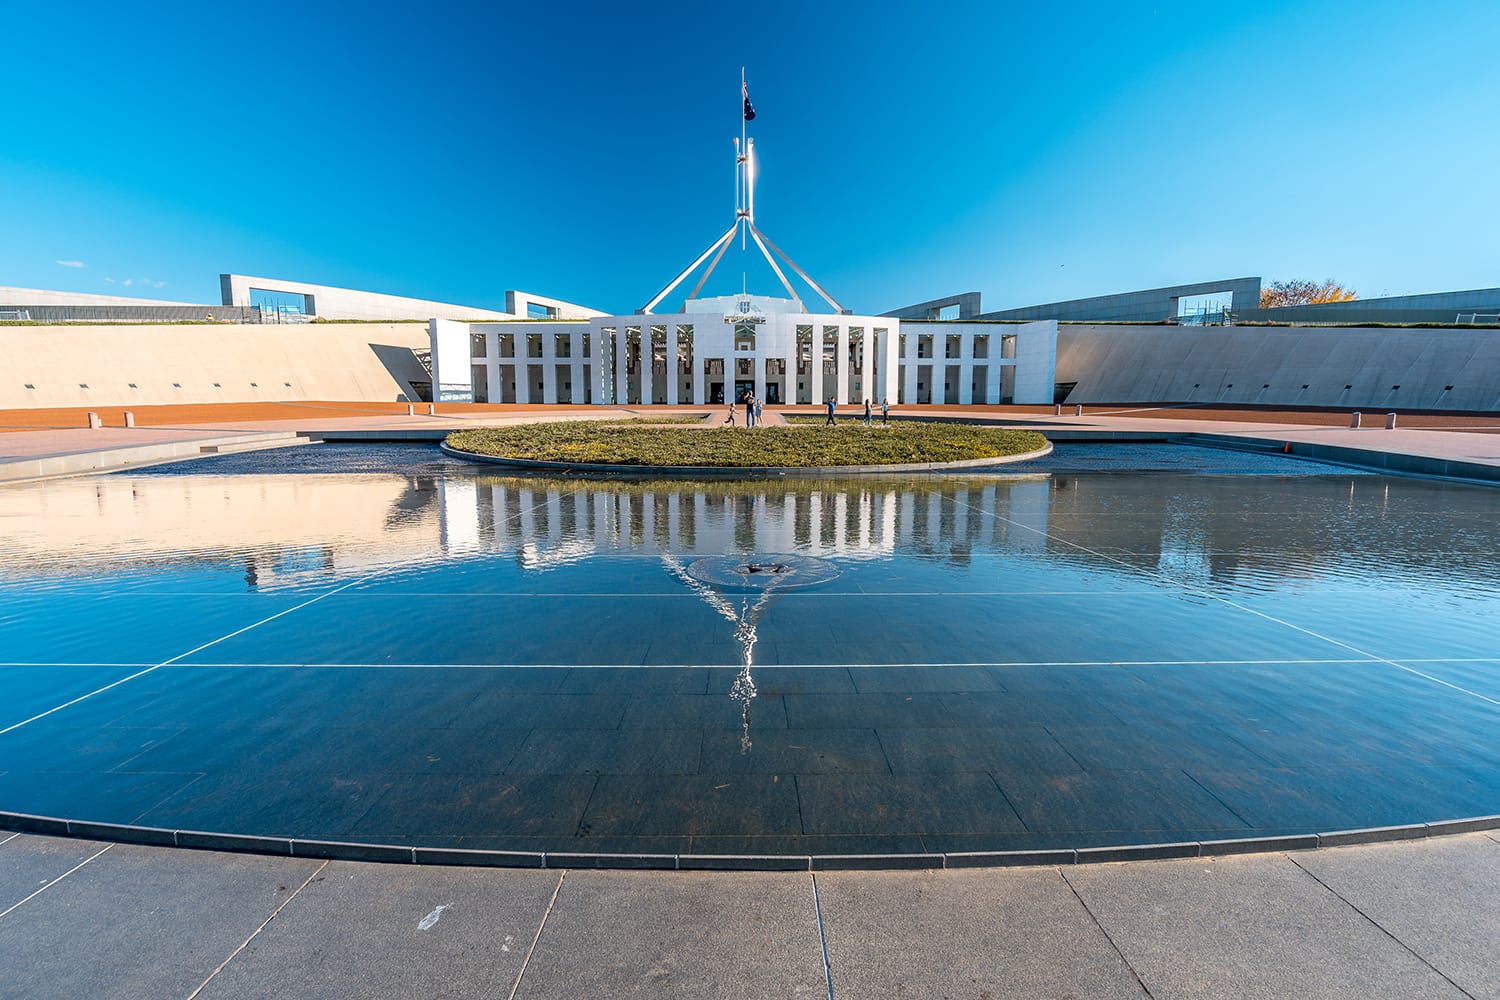 Parliament House in Canberra, Australia